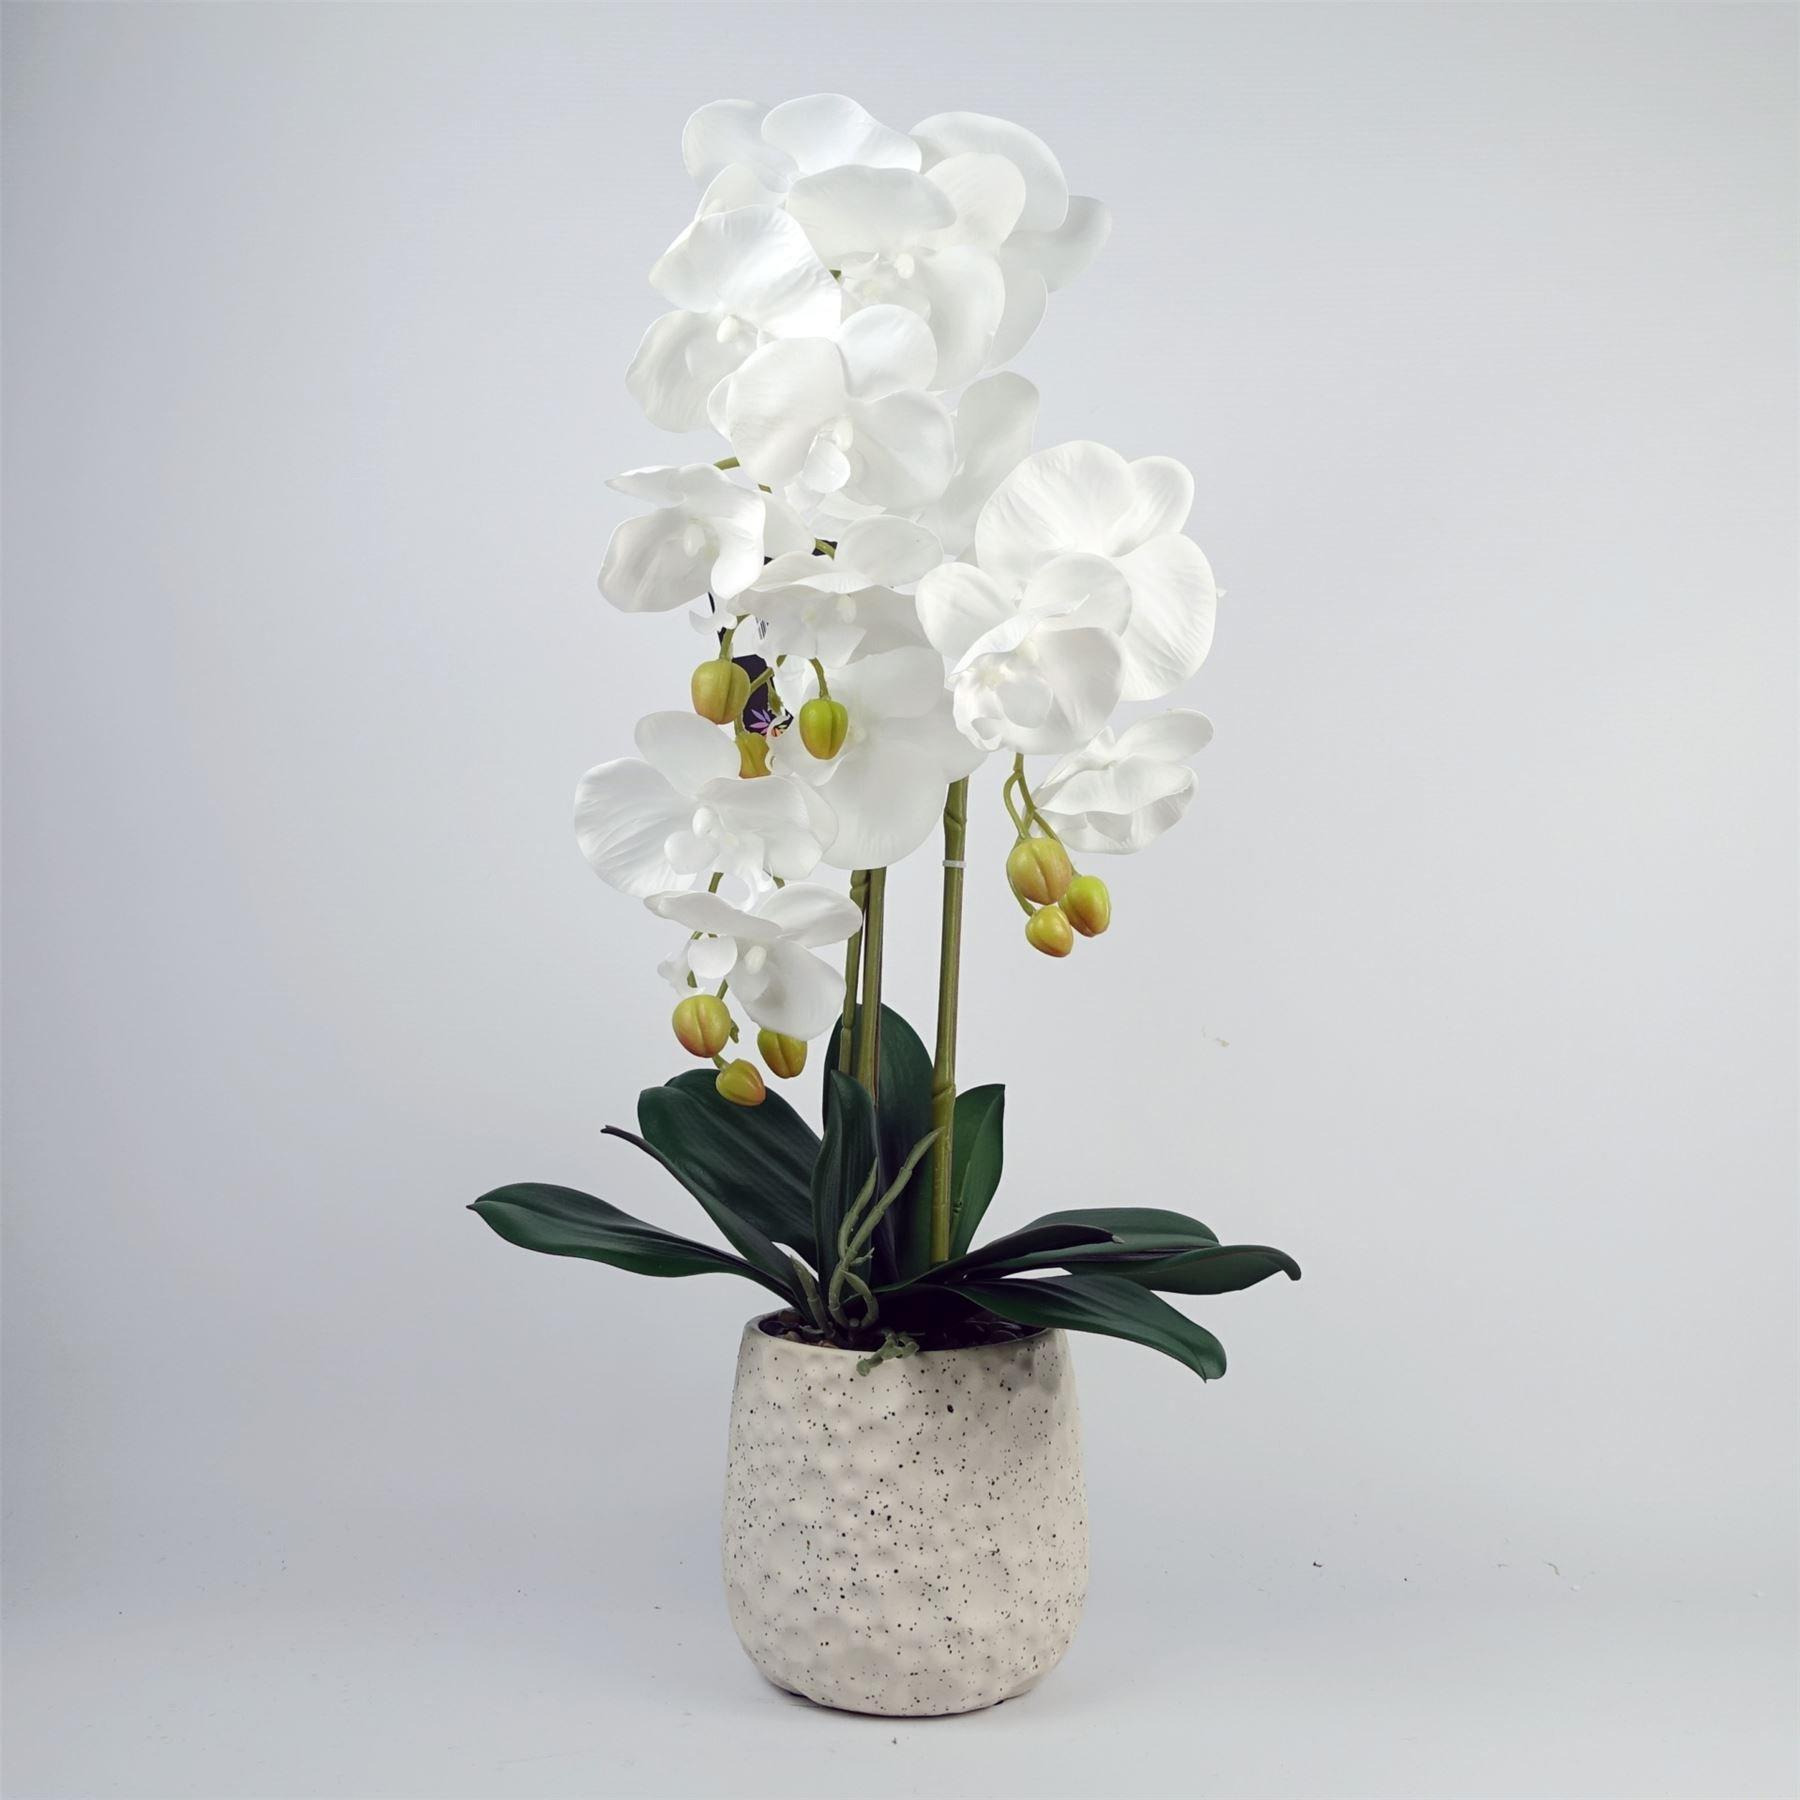 60cm Pure White Orchid with Ceramic Bubble Planter - image 1